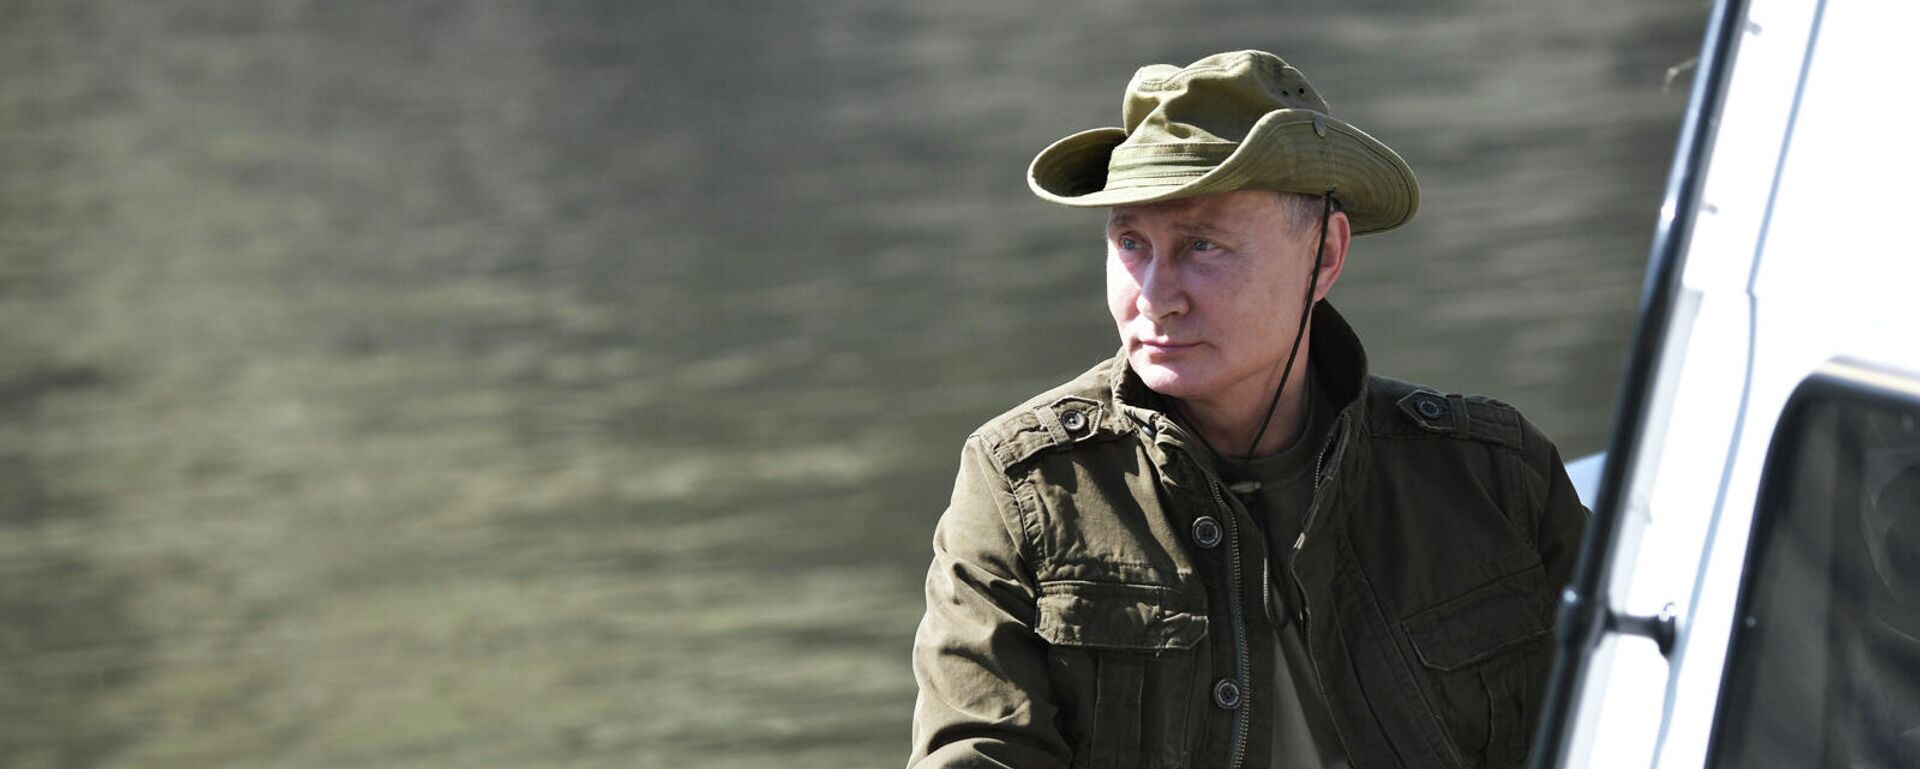 Путин Владимир Владимирович в шляпе